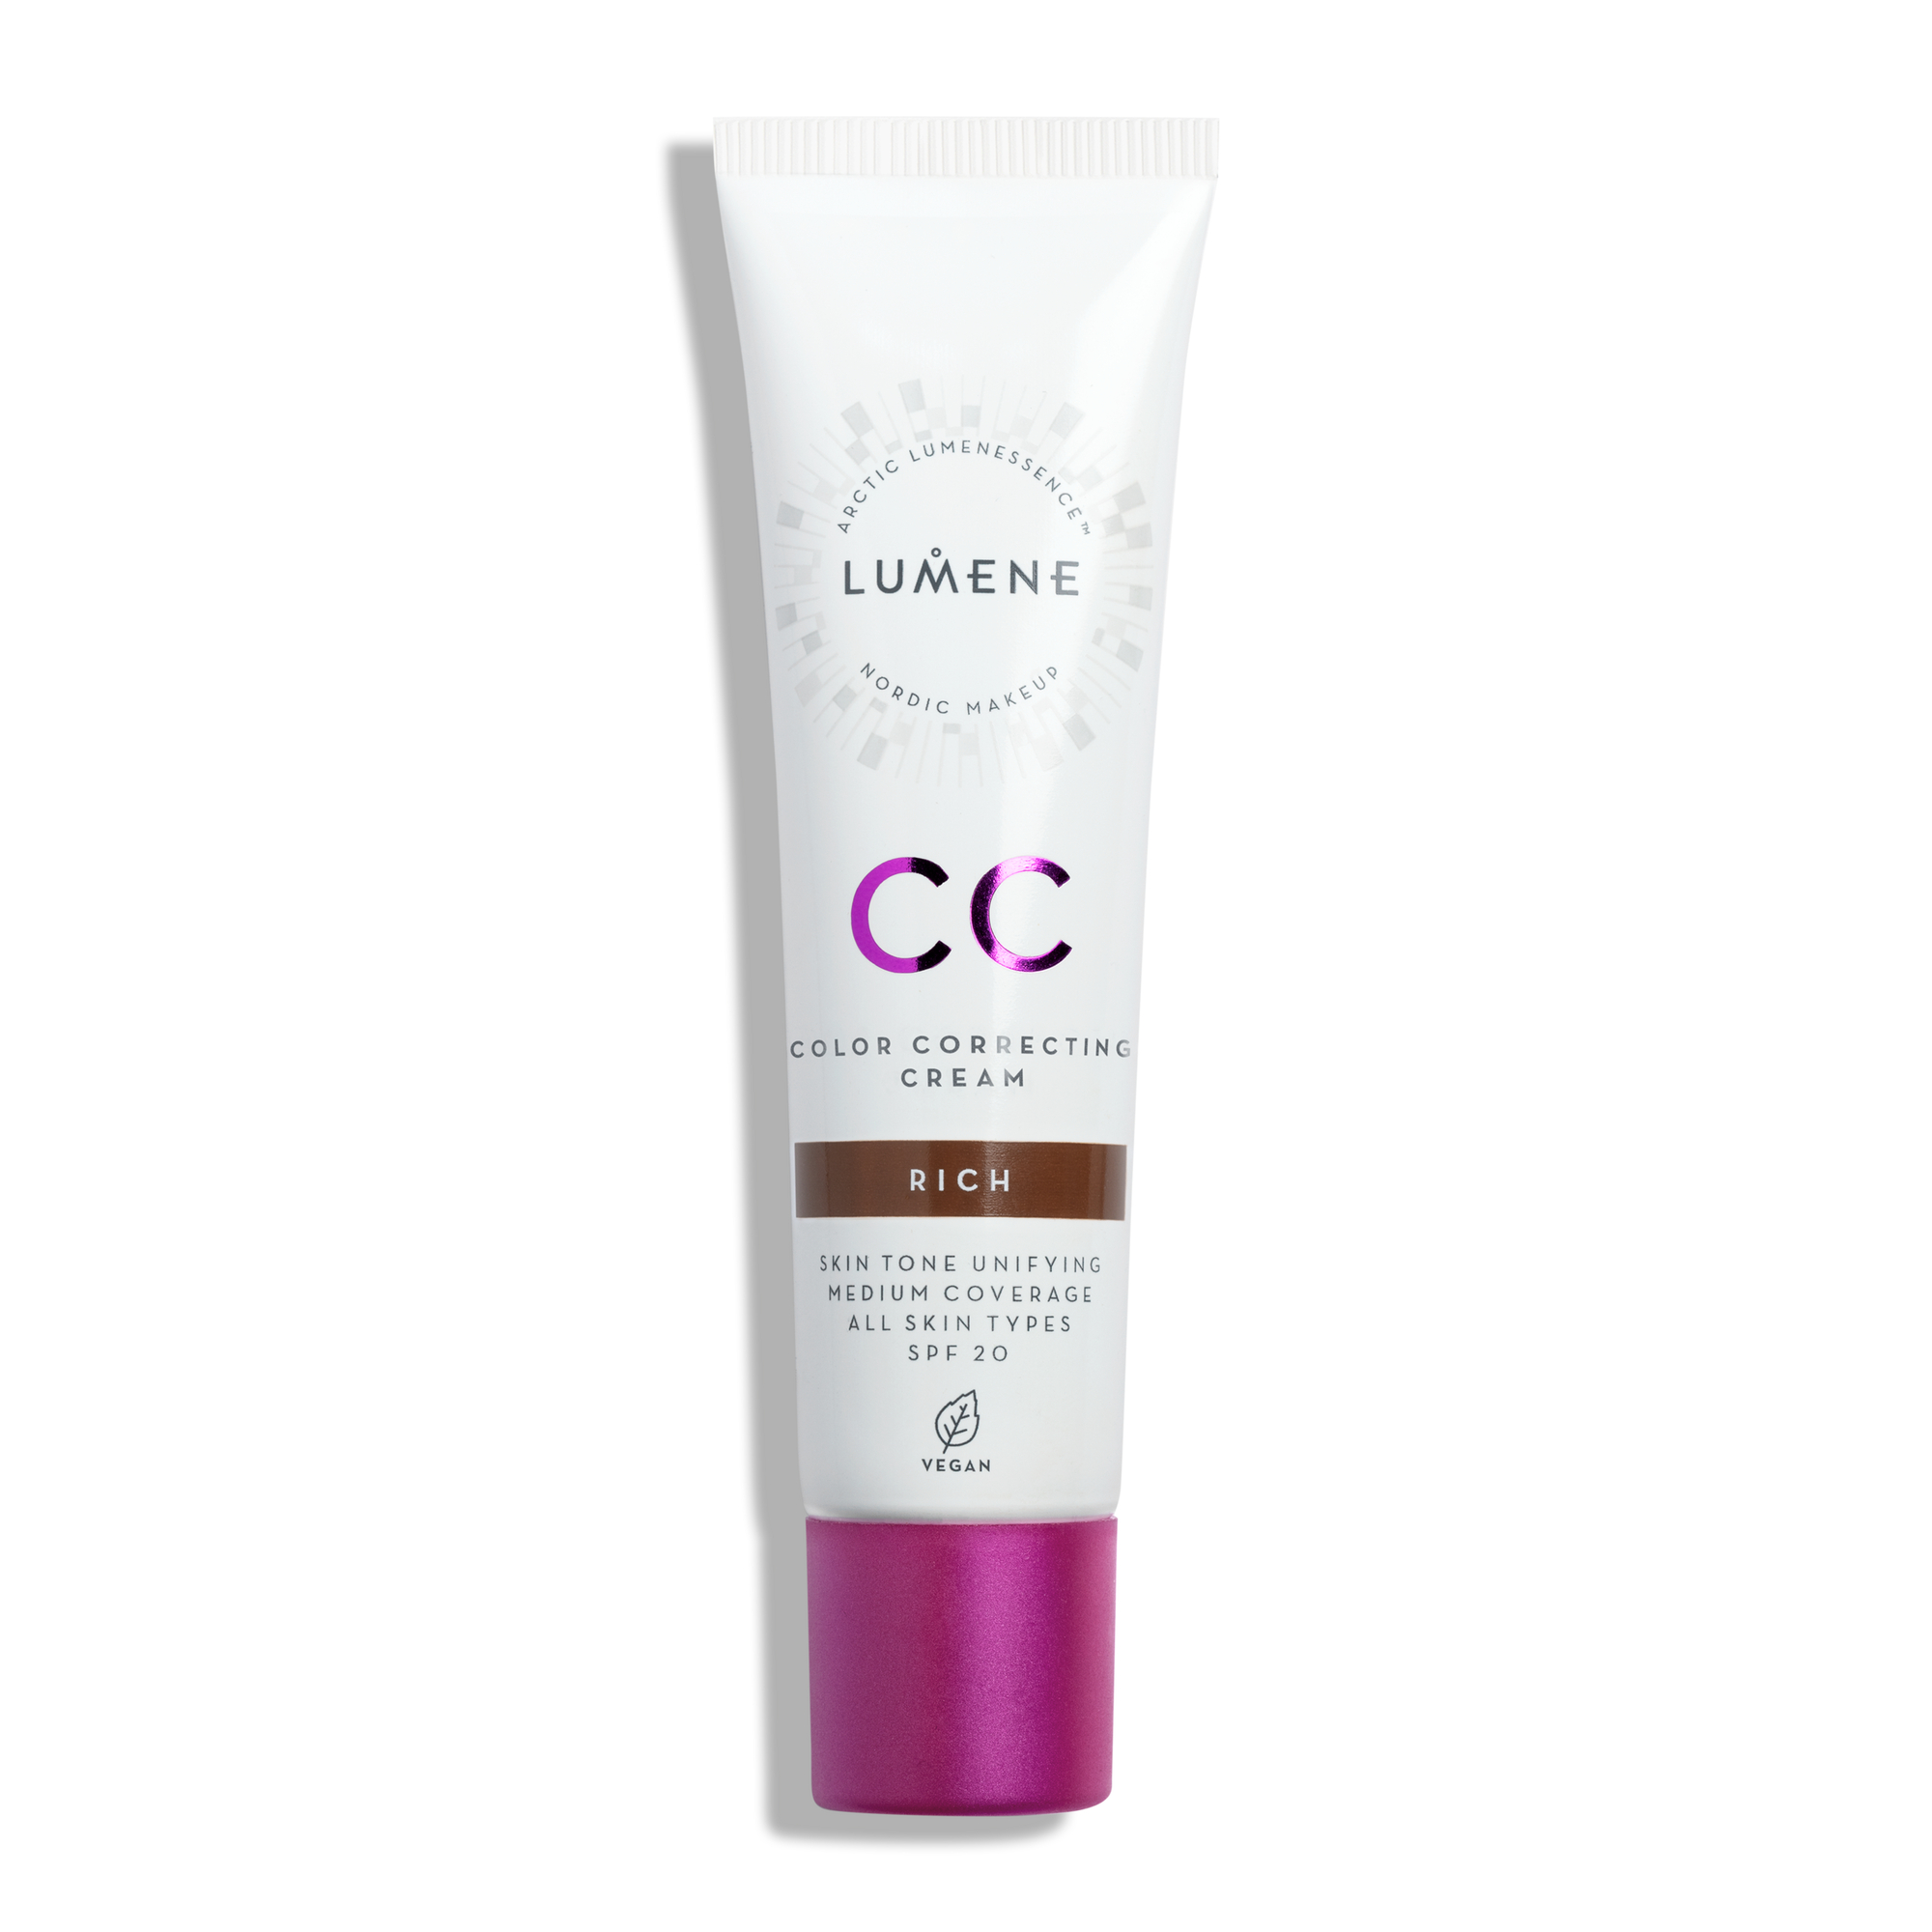 Lumene CC Color Correcting Cream SPF20, Rich, 30 ml